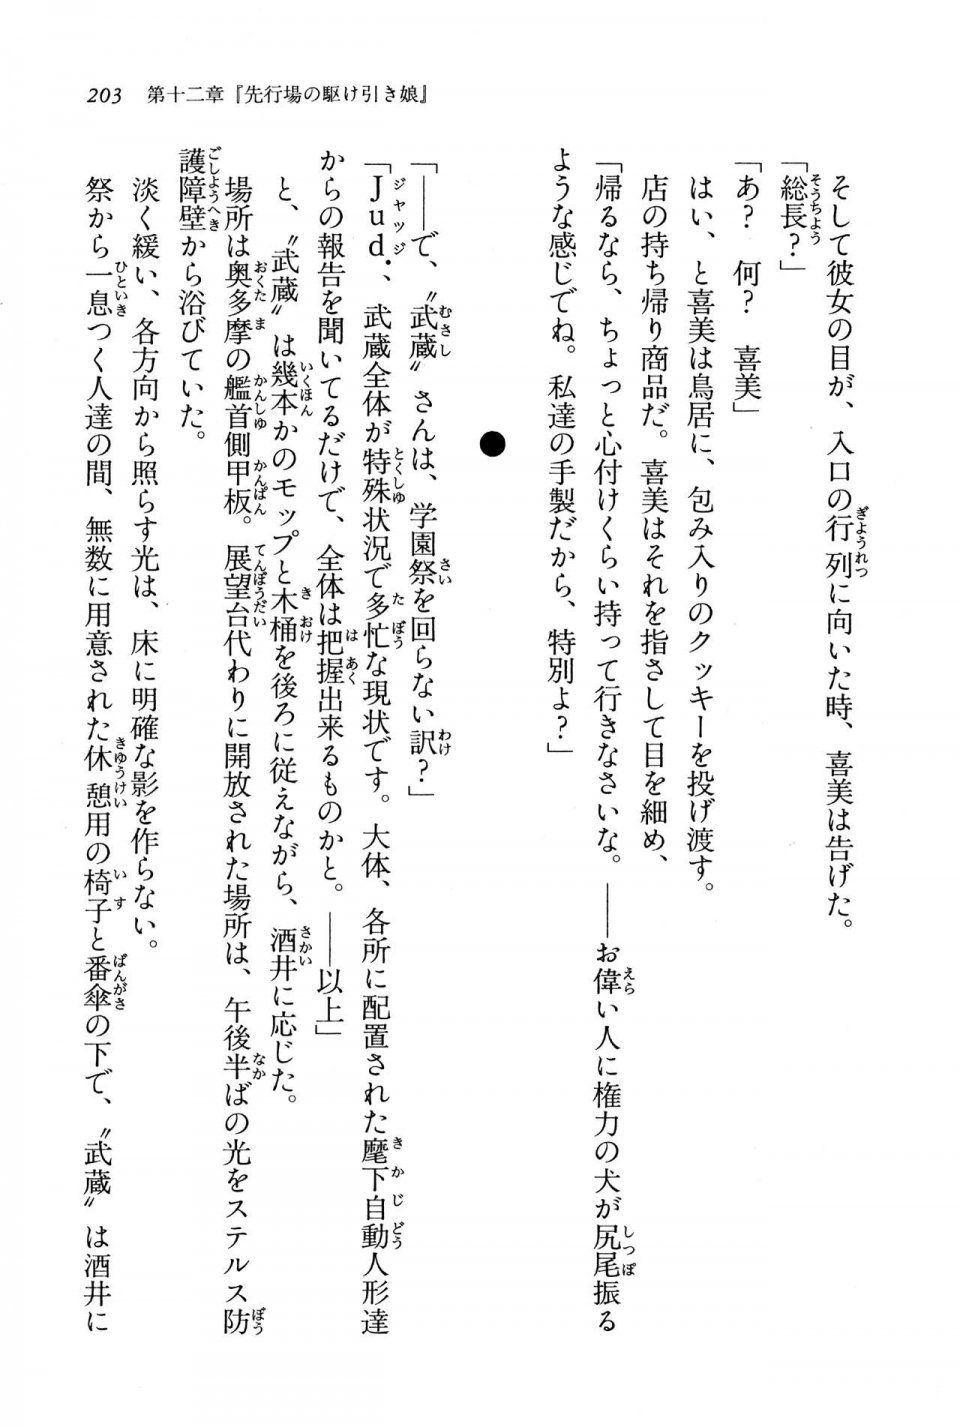 Kyoukai Senjou no Horizon BD Special Mininovel Vol 8(4B) - Photo #207